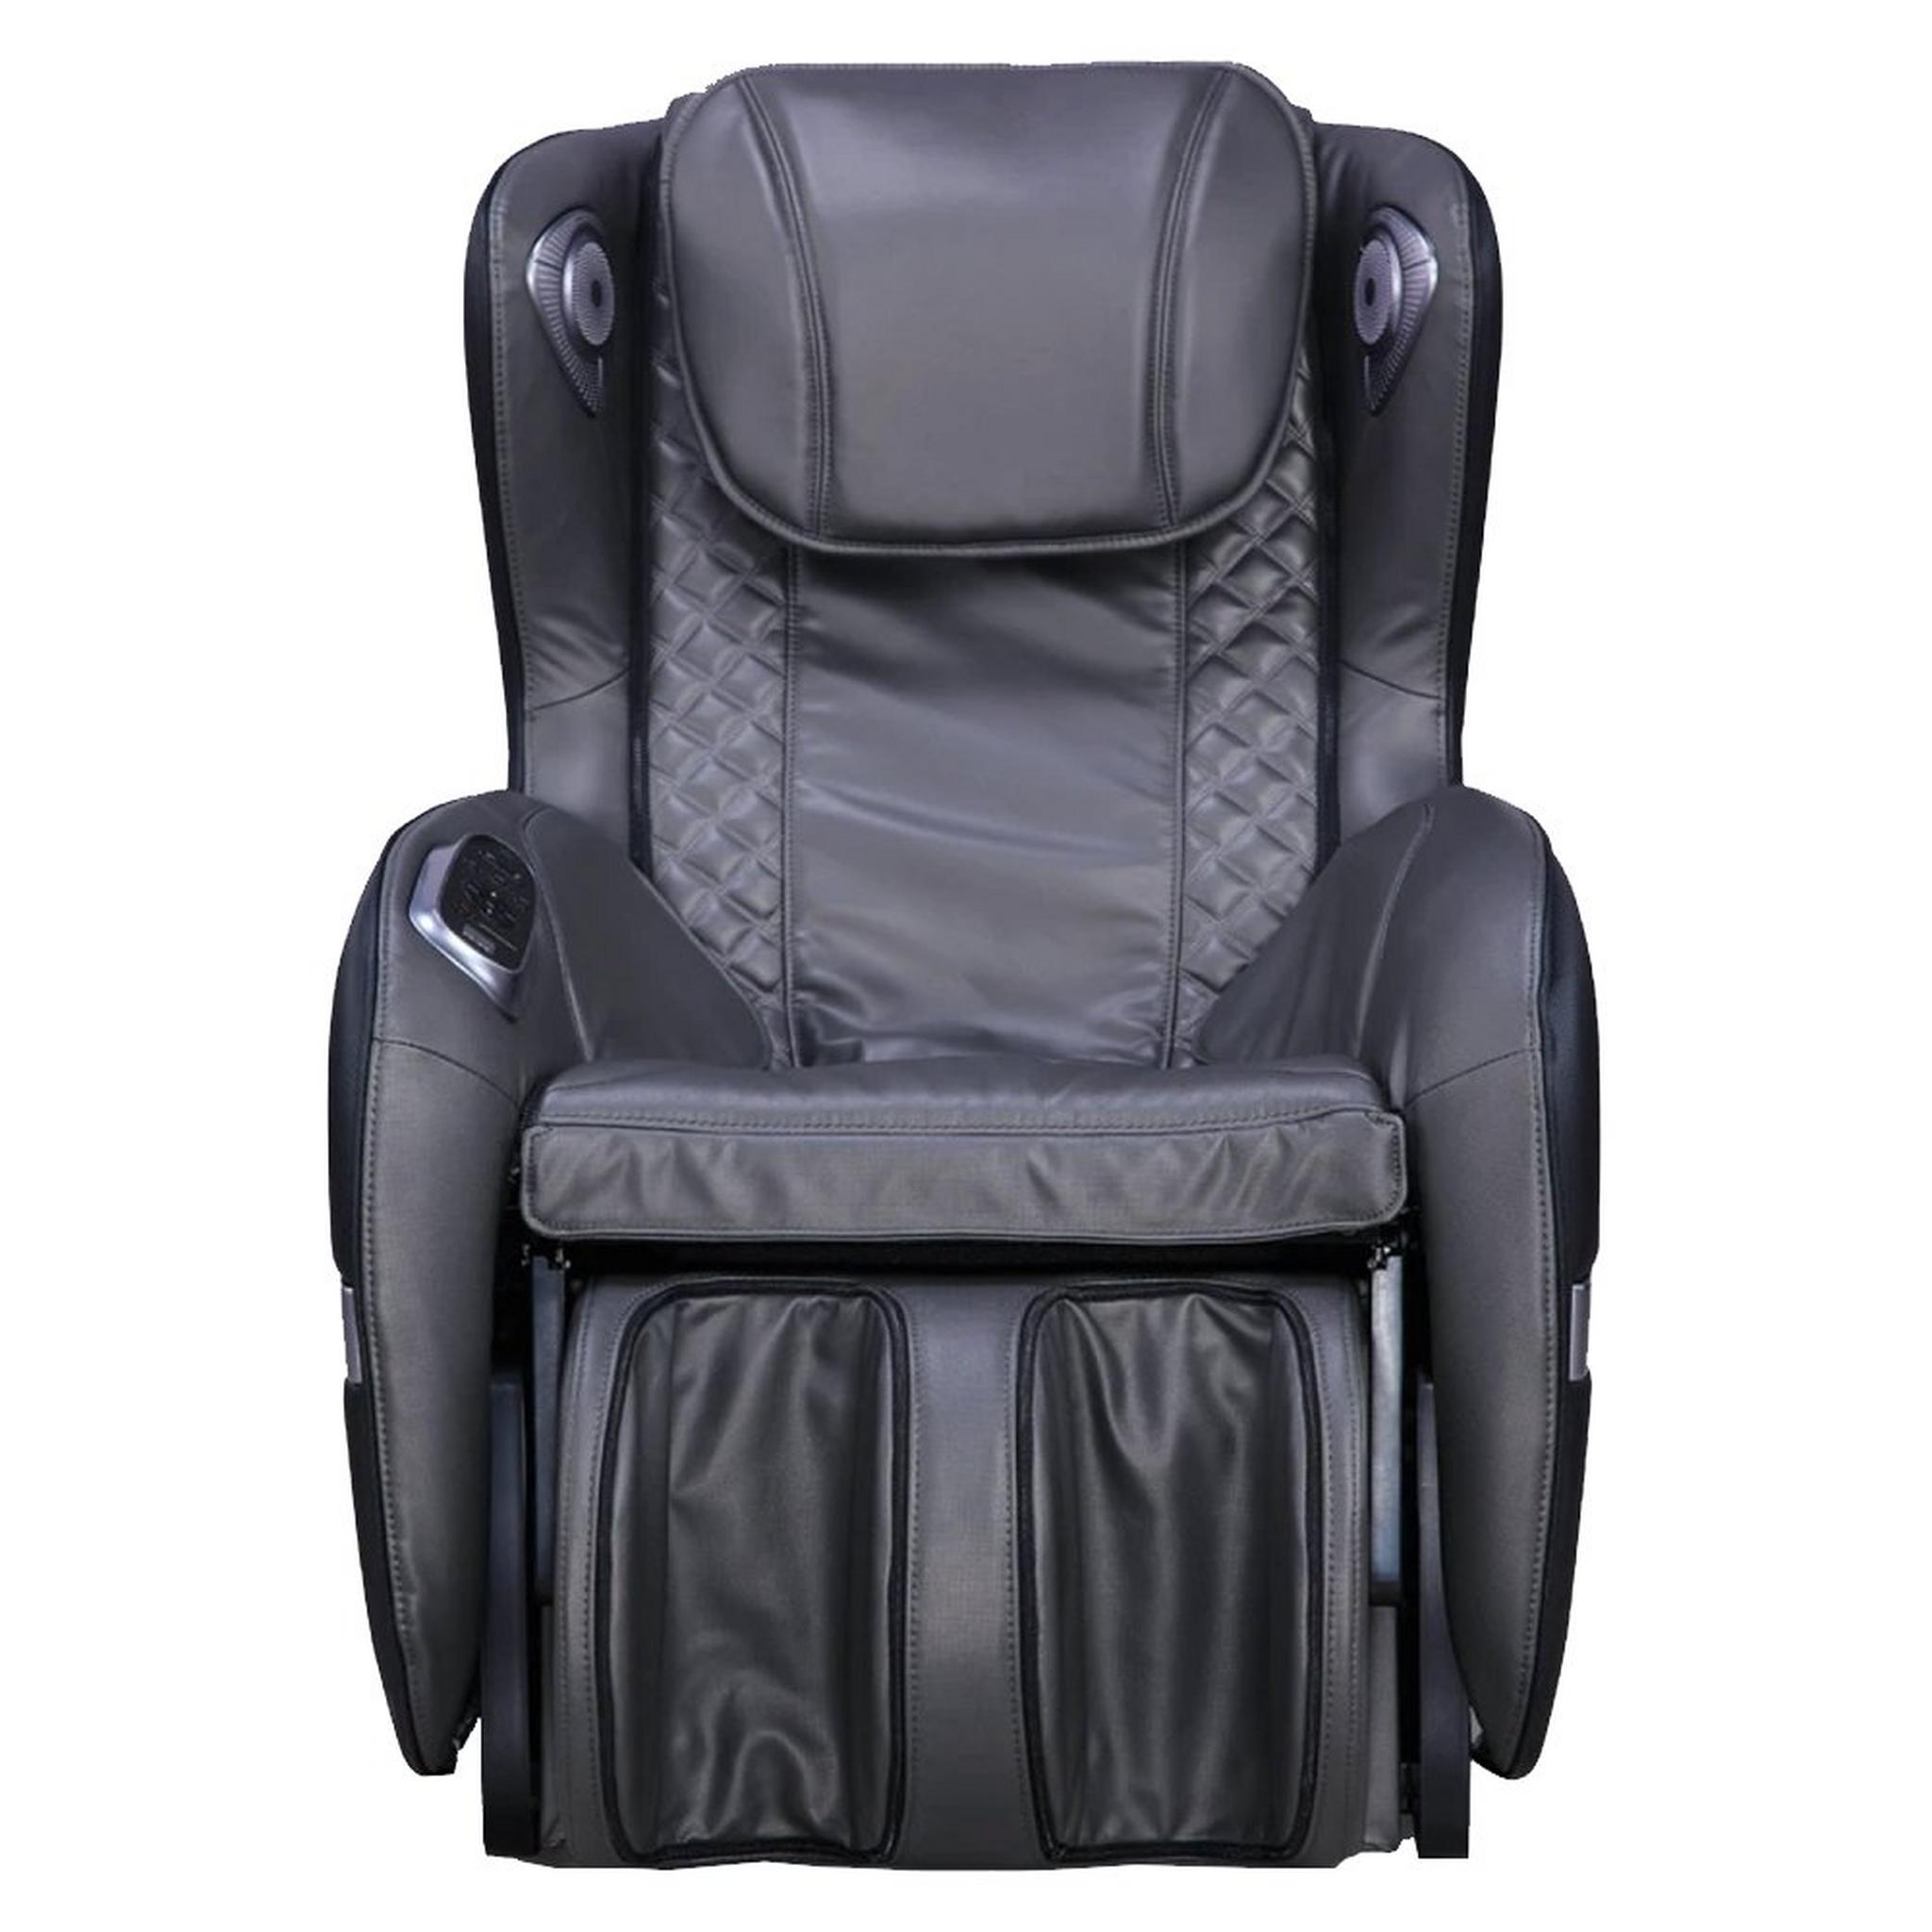 iRest Massage Chair (SL-A158)